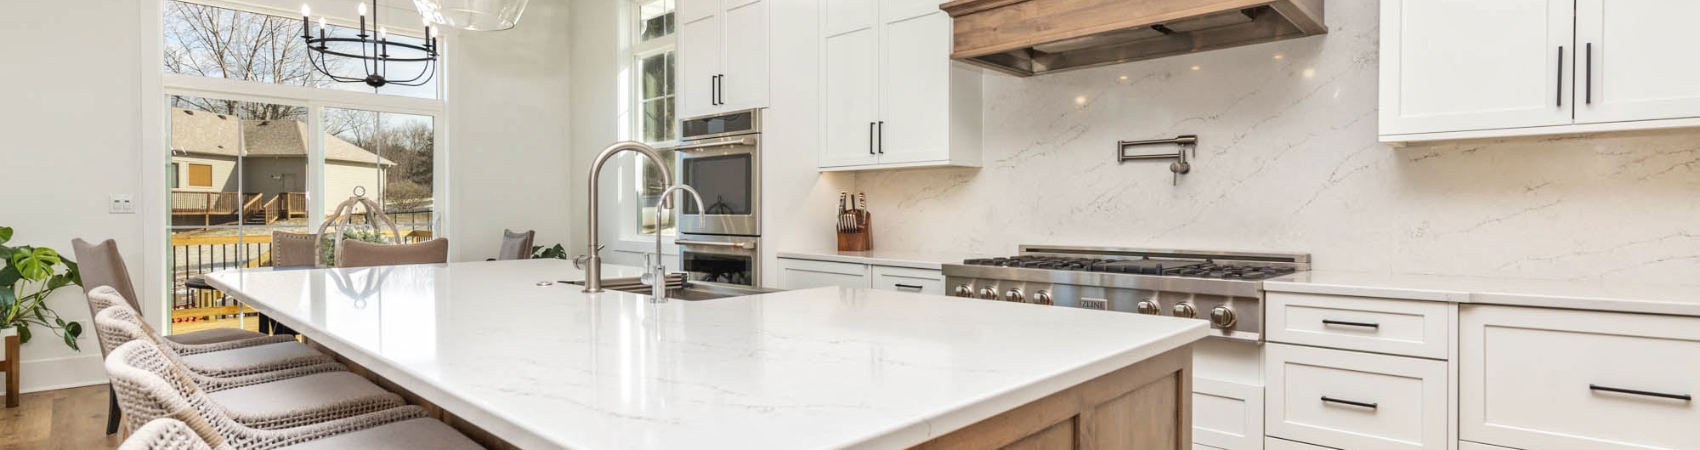 white quartz kitchen remodel with island by benson stone co